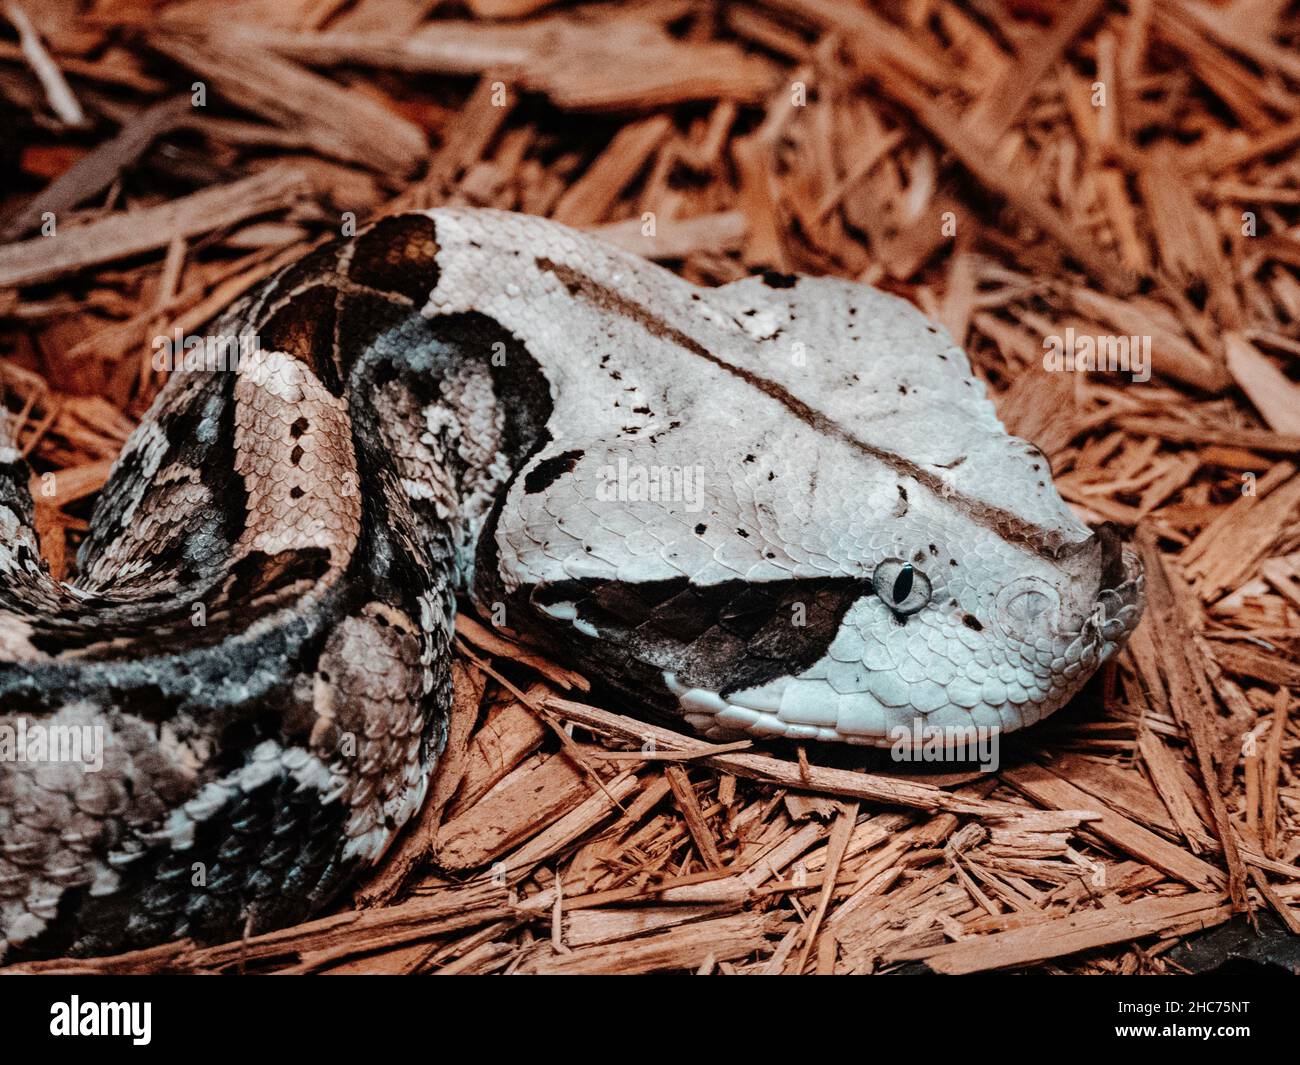 Closeup shot of a dangerous snake on dry grass Stock Photo